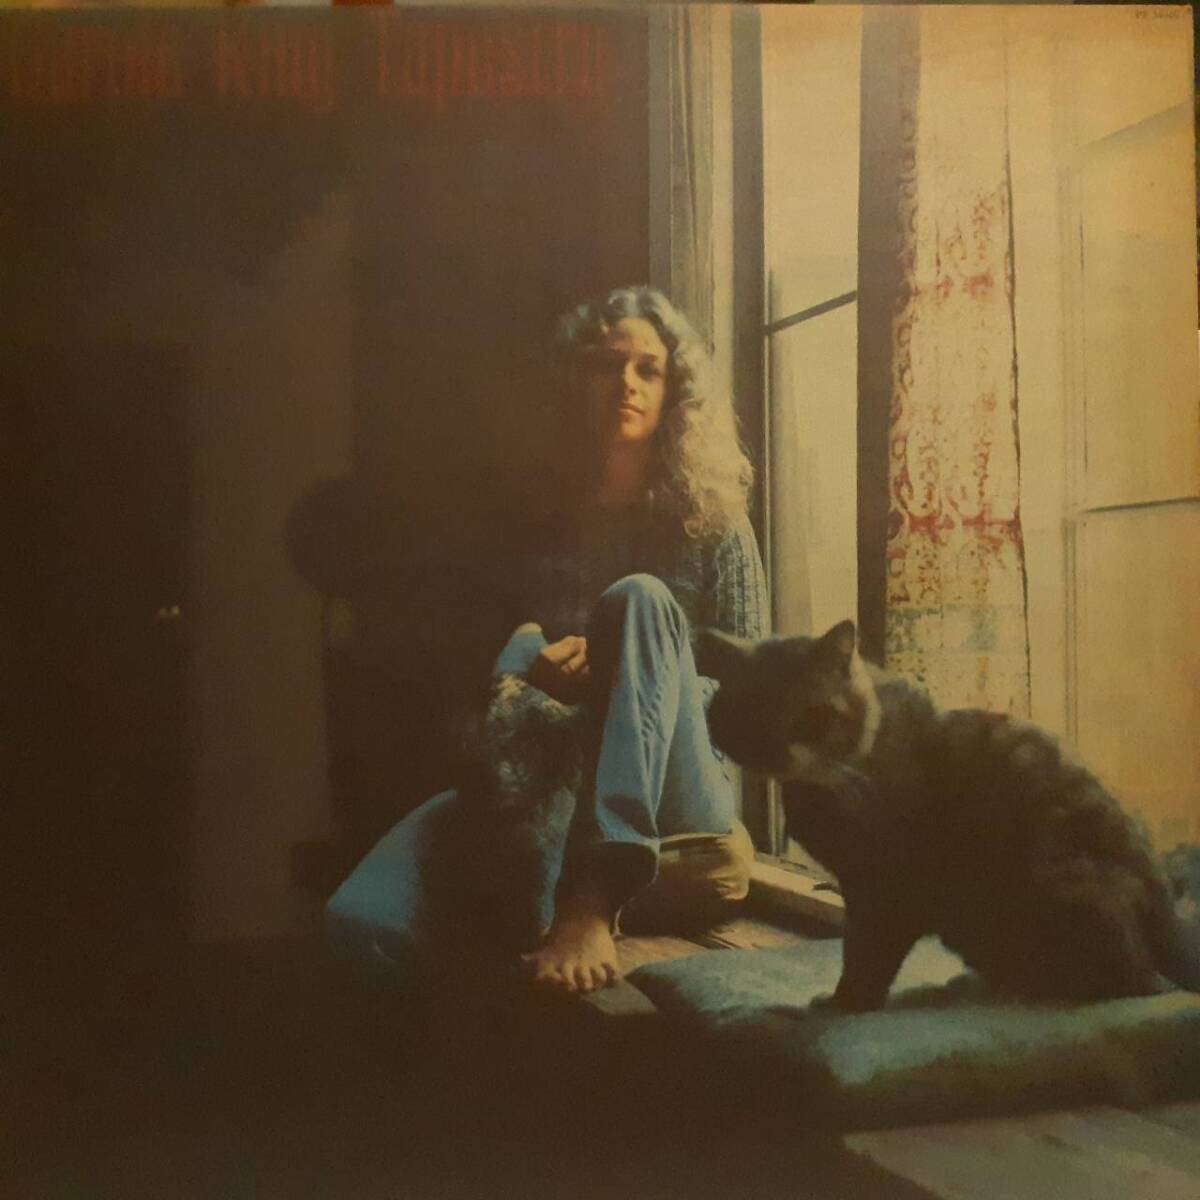 For Govermental Sale Only金印 米ODE EPIC盤LP テクスチャー Carole King / Tapestry 1977年 PE34946 政府流通 英旗刻印 キャロル・キング_画像1